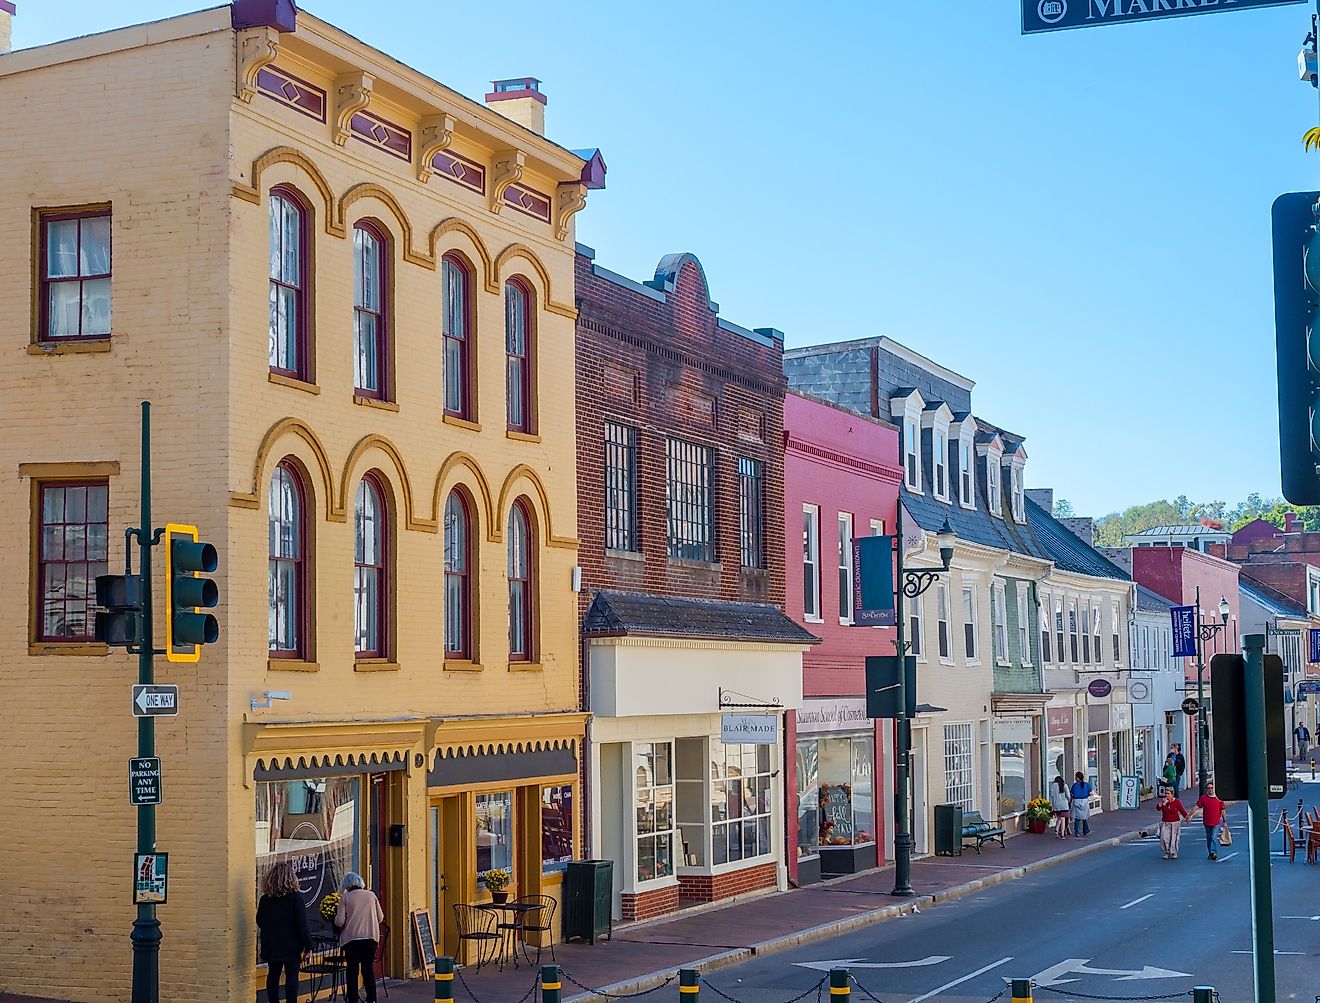 Buildings along Beverley St in Downtown Historic Staunton, Virginia. Image credit Kyle J Little via Shutterstock